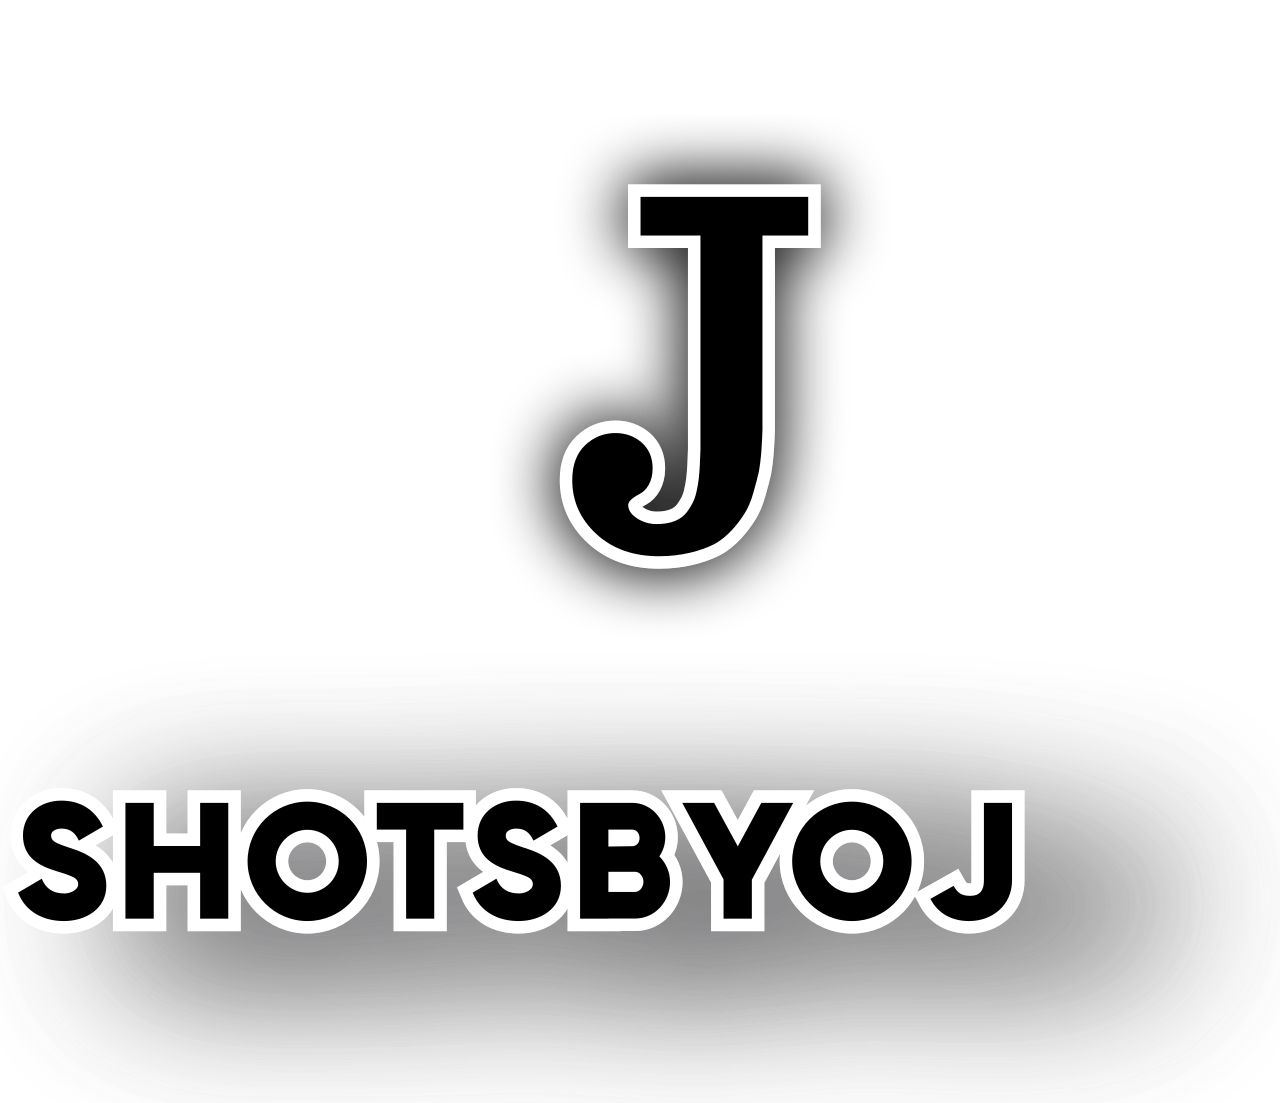 ShotsbyOJ's logo